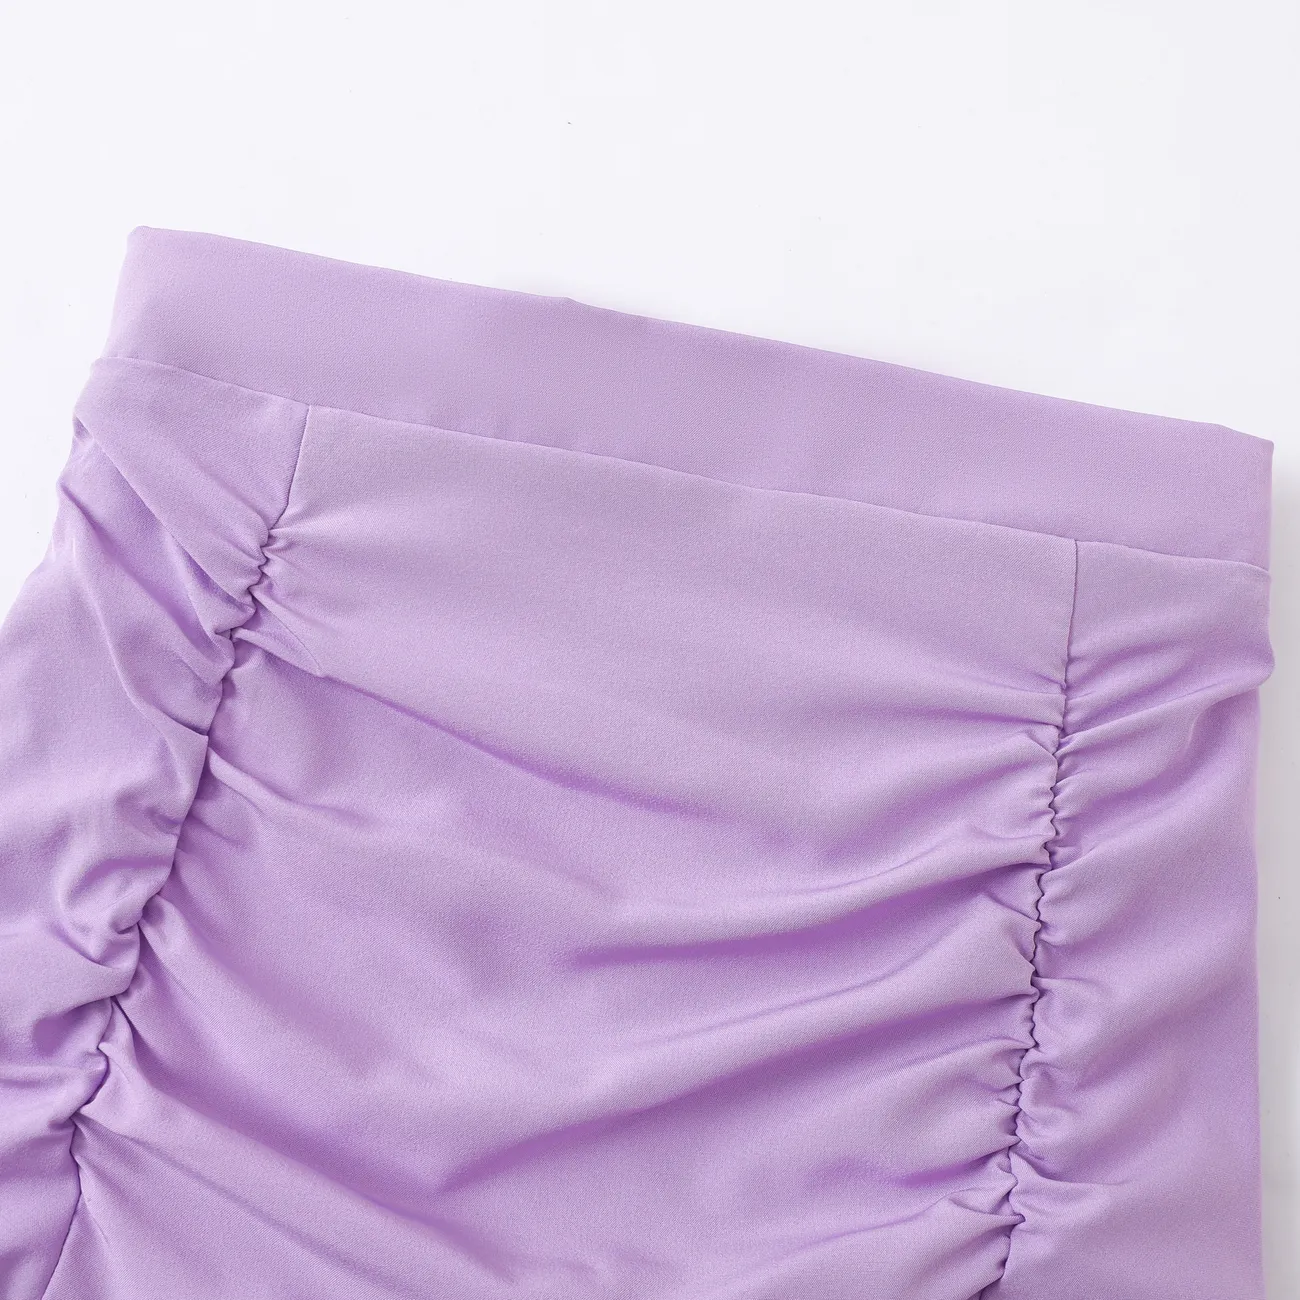 Sweet Ruffle Edge Skirt for Girls - Polyester Spandex Blend - 1 Piece - Regular Fit - Kid's Skirt Cl Purple big image 1